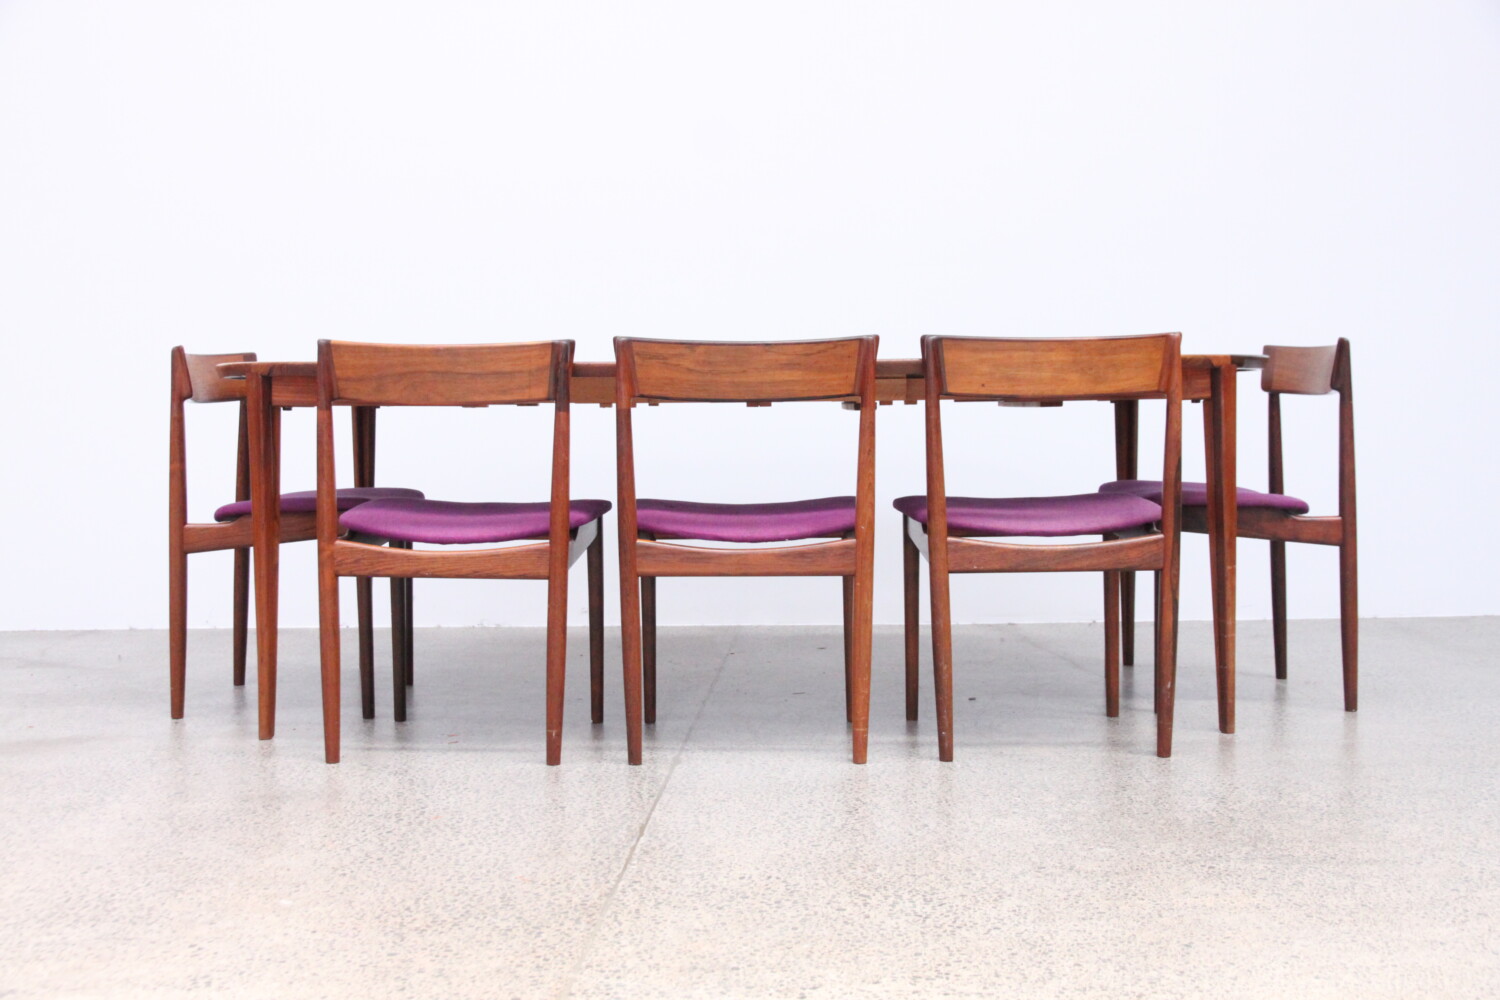 Rosewood Extendable Table by Rosengren Hansen